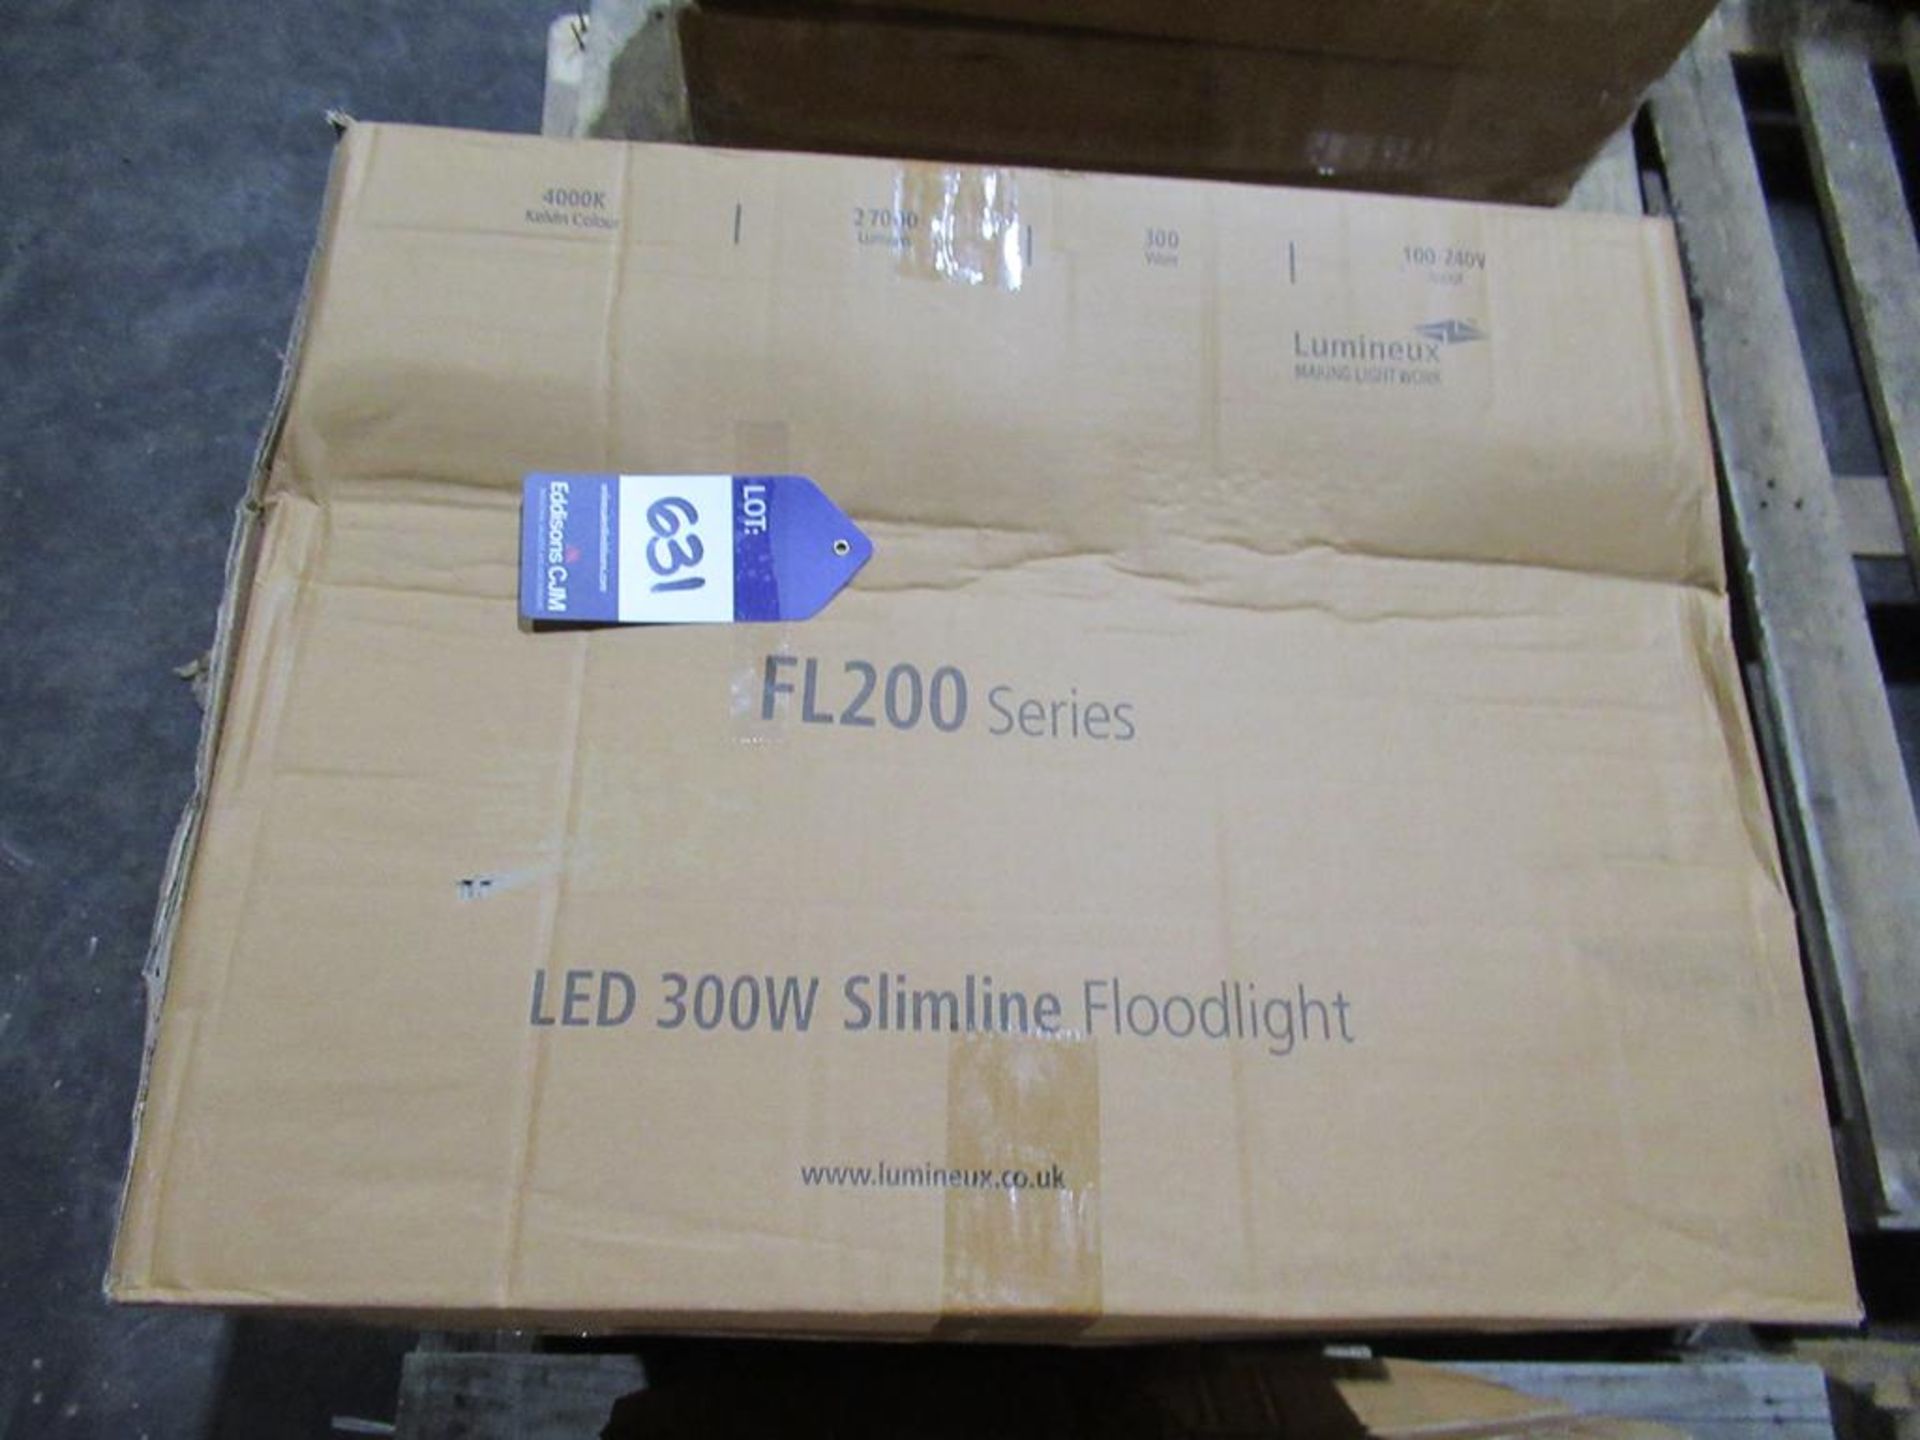 4 x LED 300W Slimline Floodlight 4000K 100-240V Input OEM Trade Price £1156 - Image 3 of 3